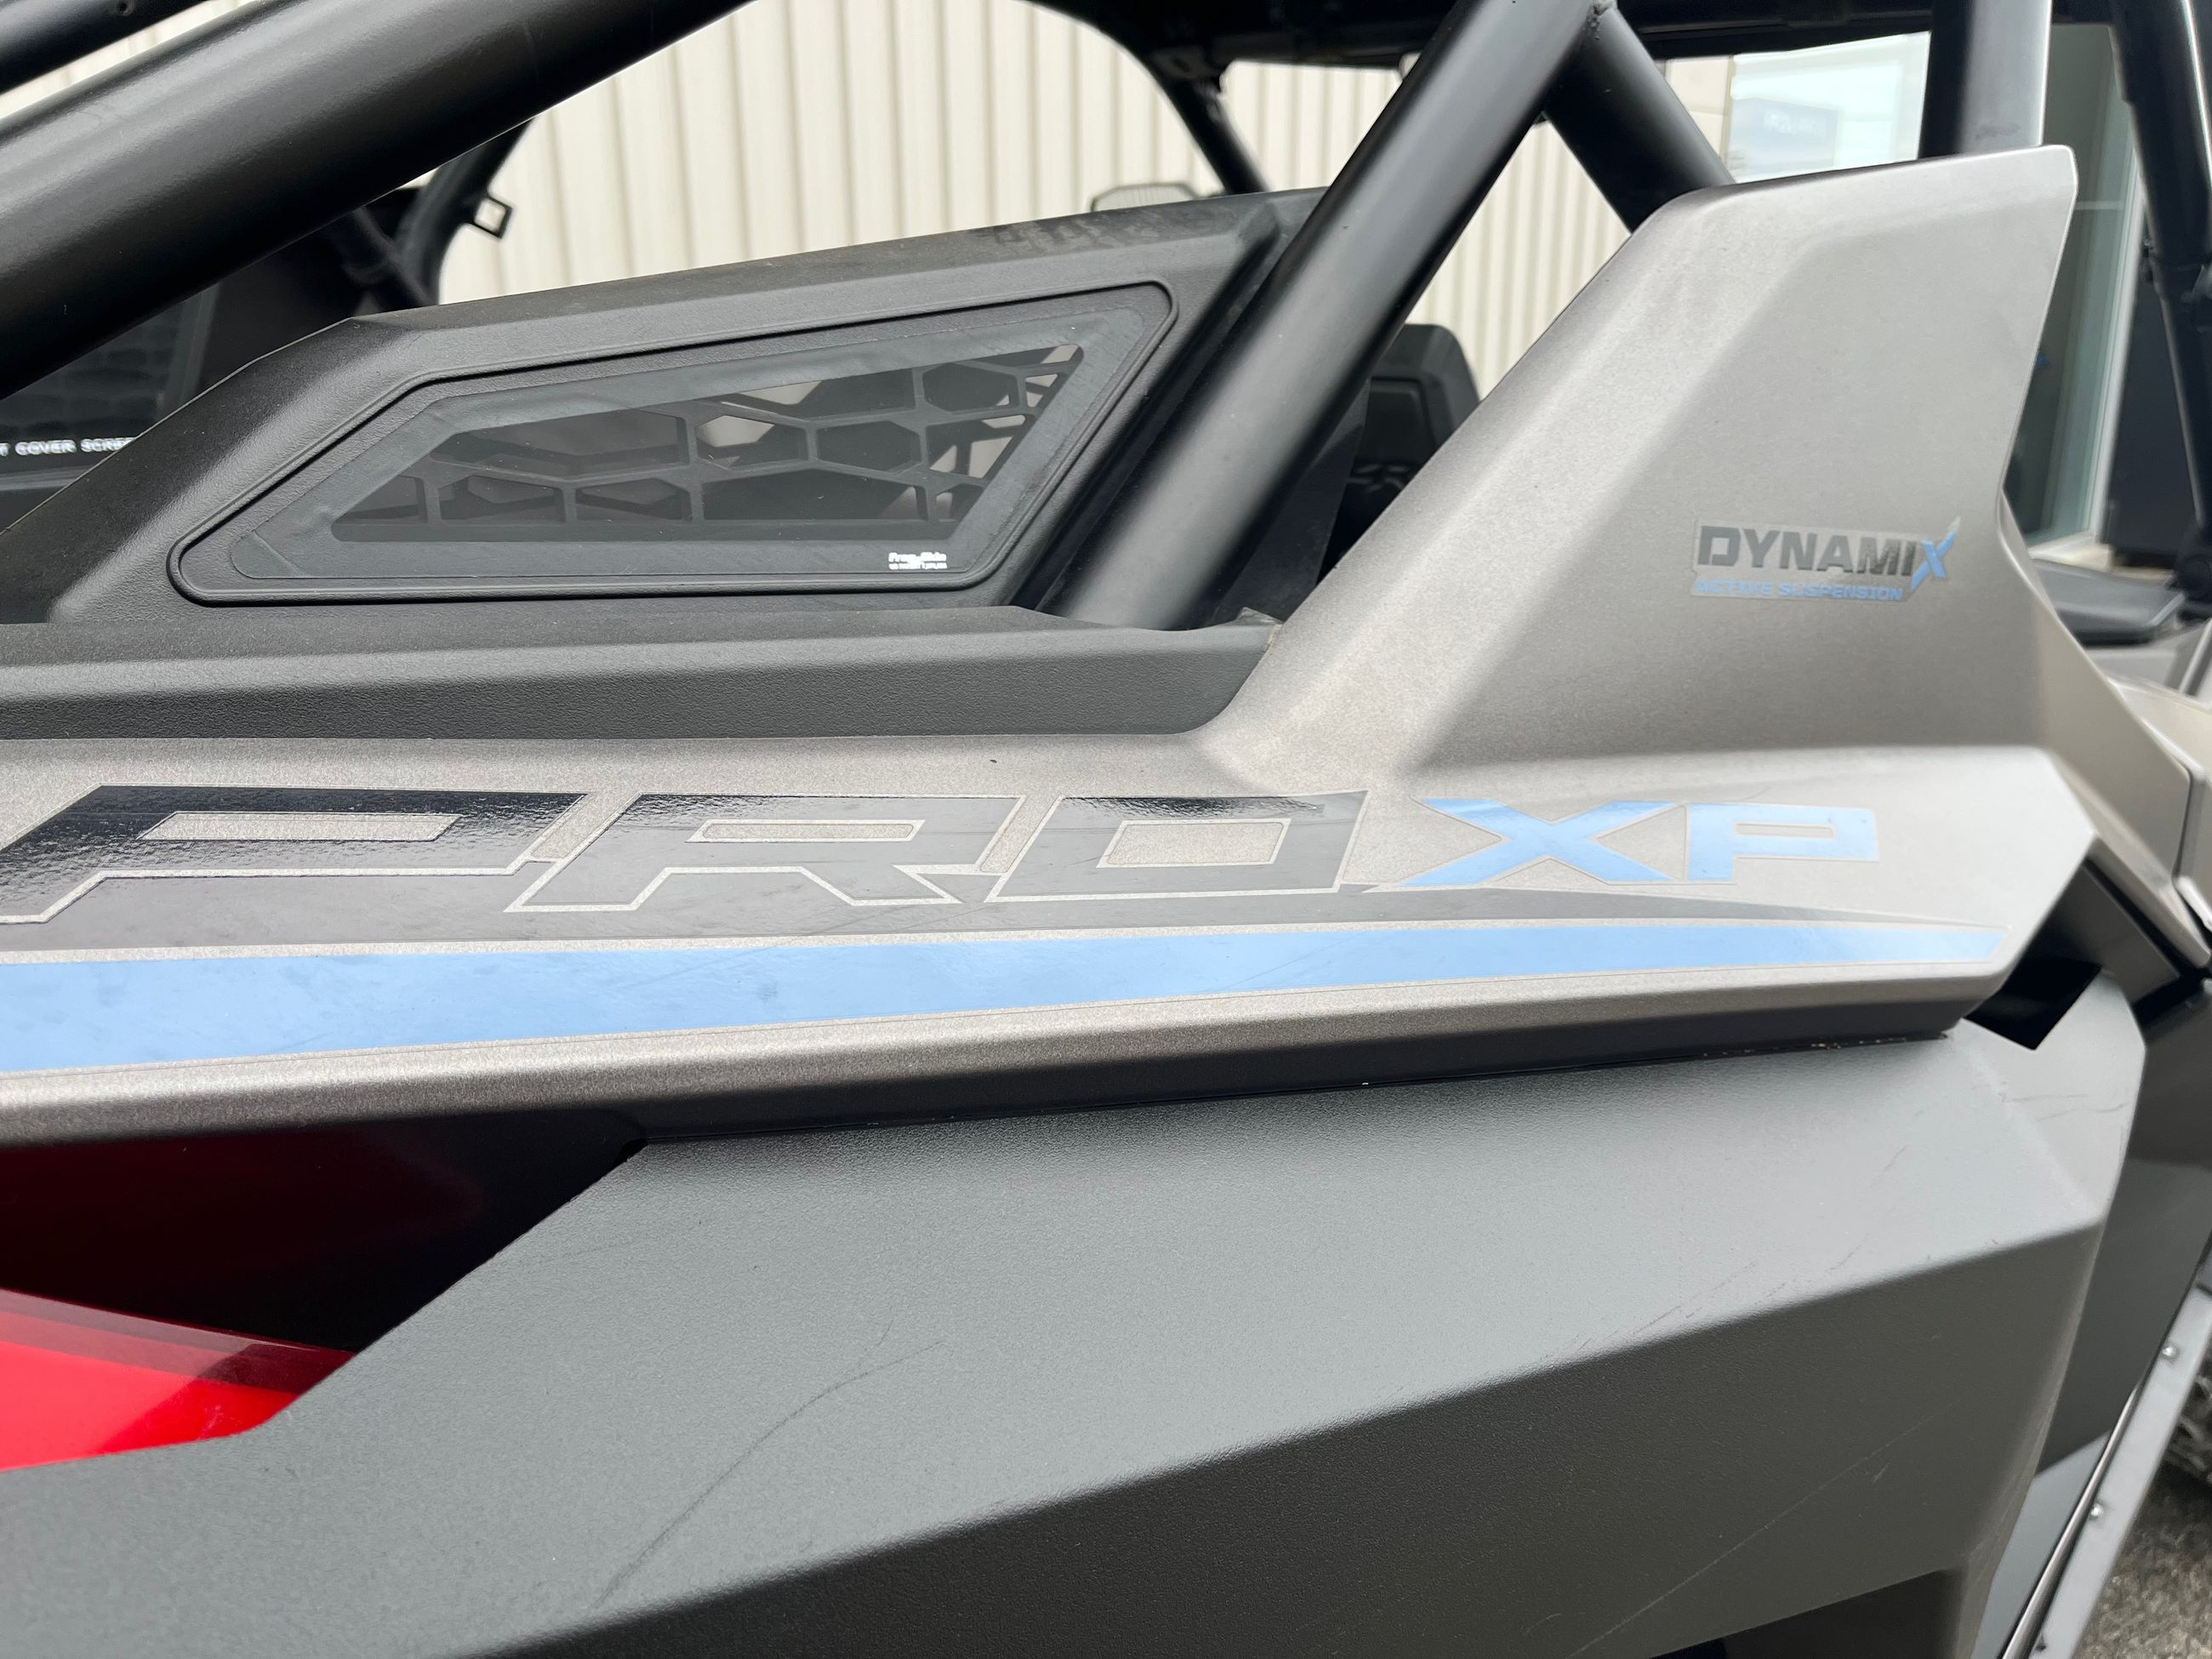 2021 Polaris RZR Pro XP Ultimate Suspension Dynamix Turbo 181Hp